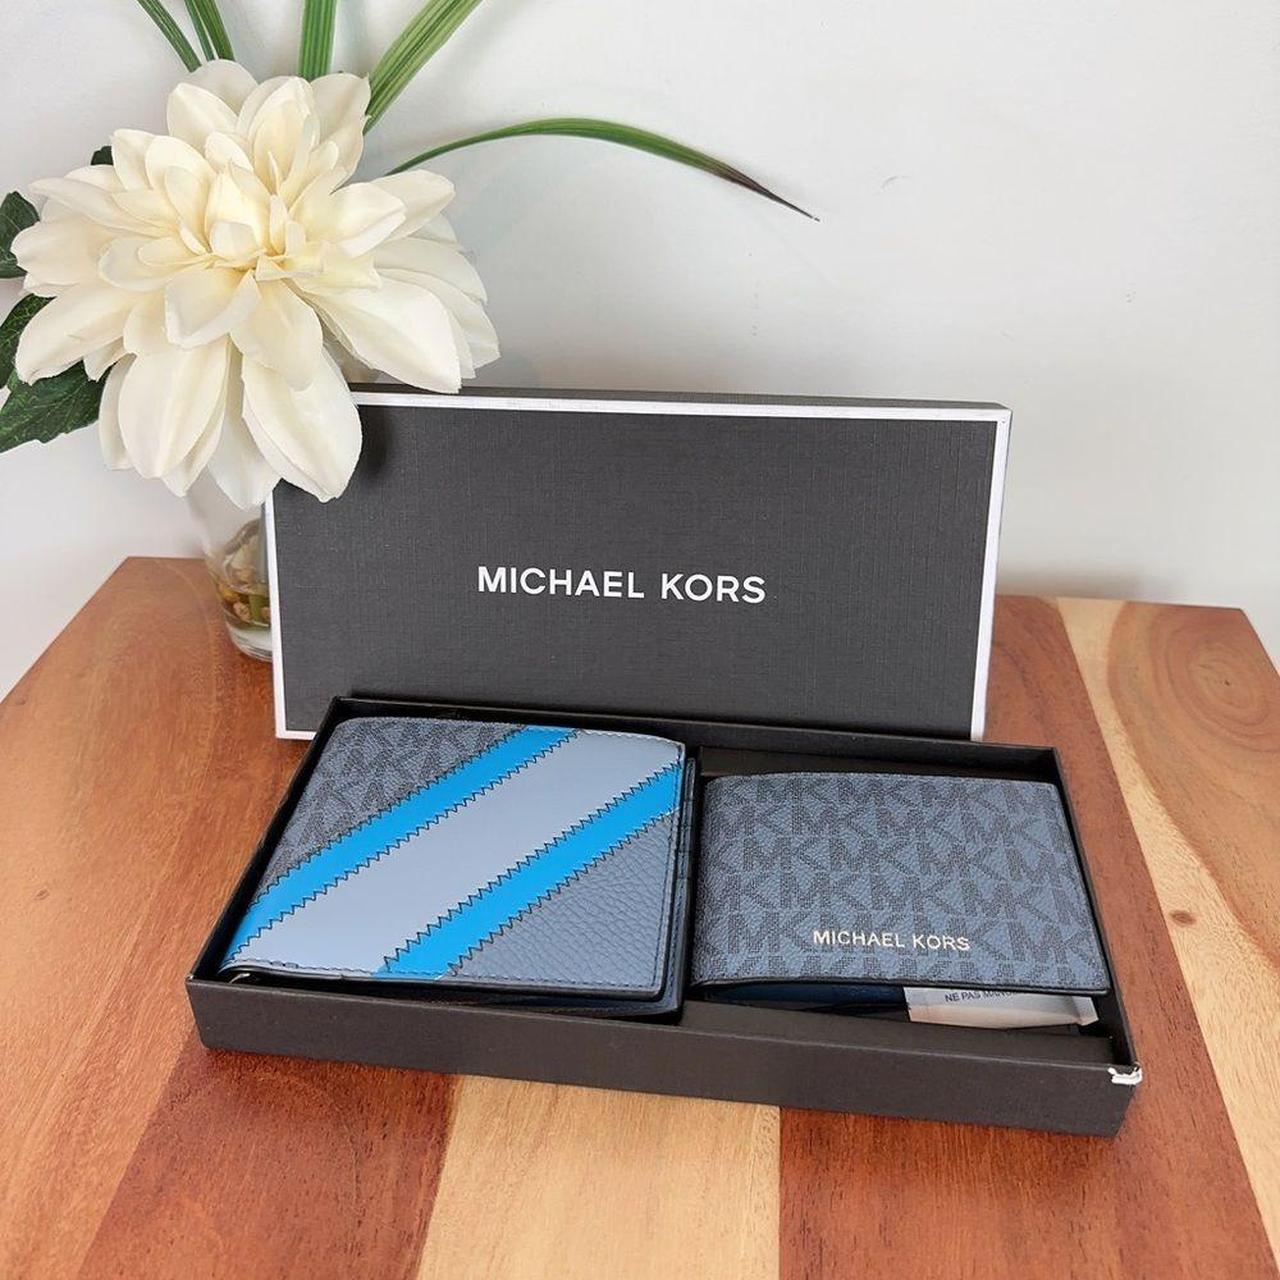 Michael Kors small black wallet #michaelkors - Depop